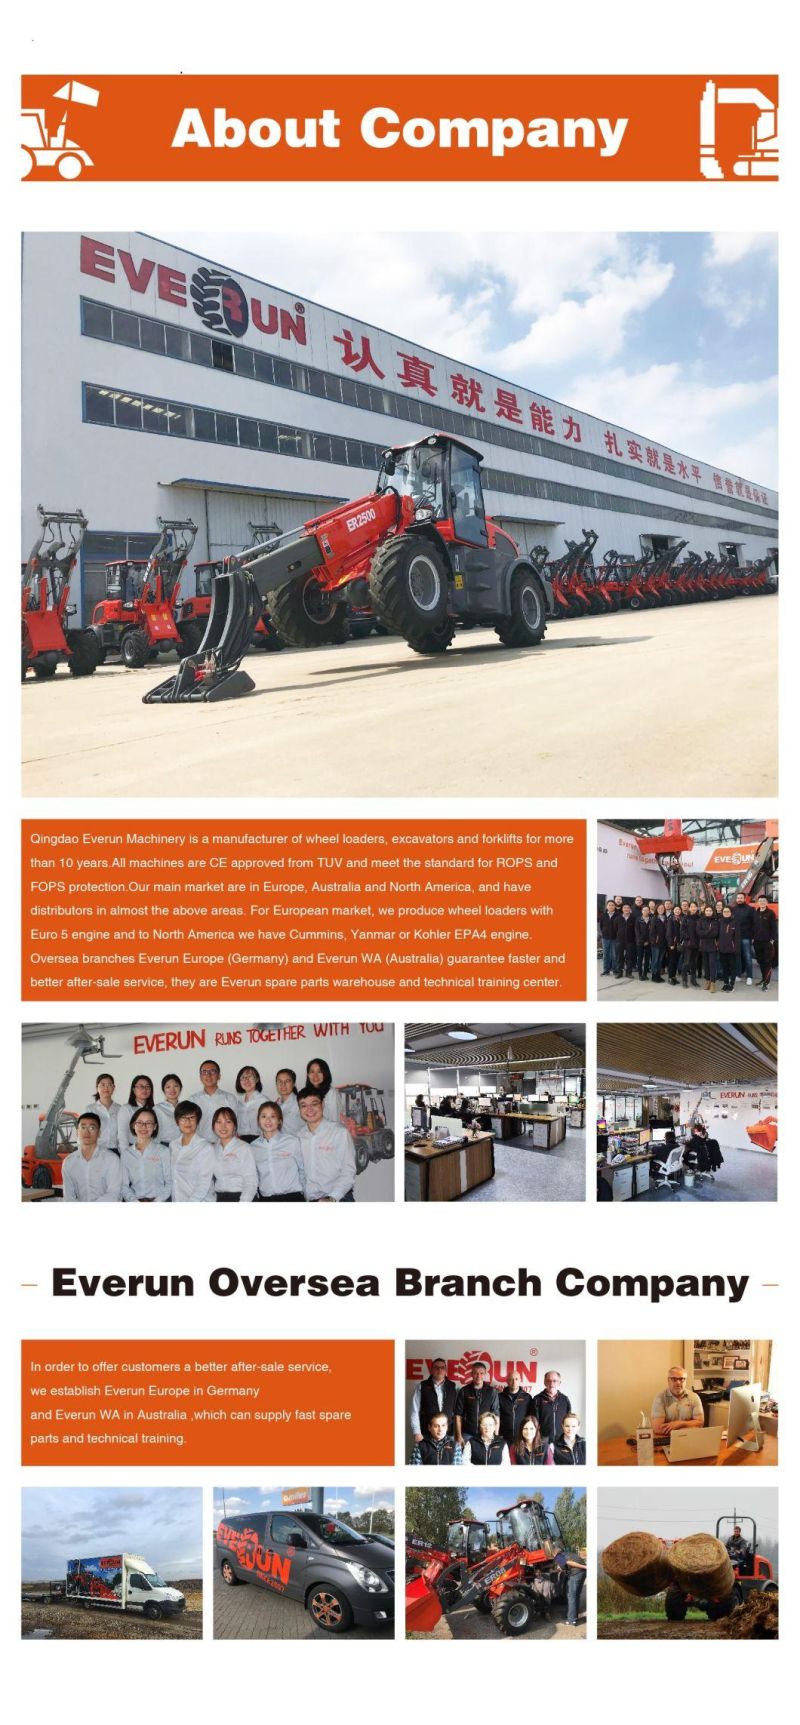 Everun ERDF20 2ton Construction Equipment Machinery Forklift Made in China